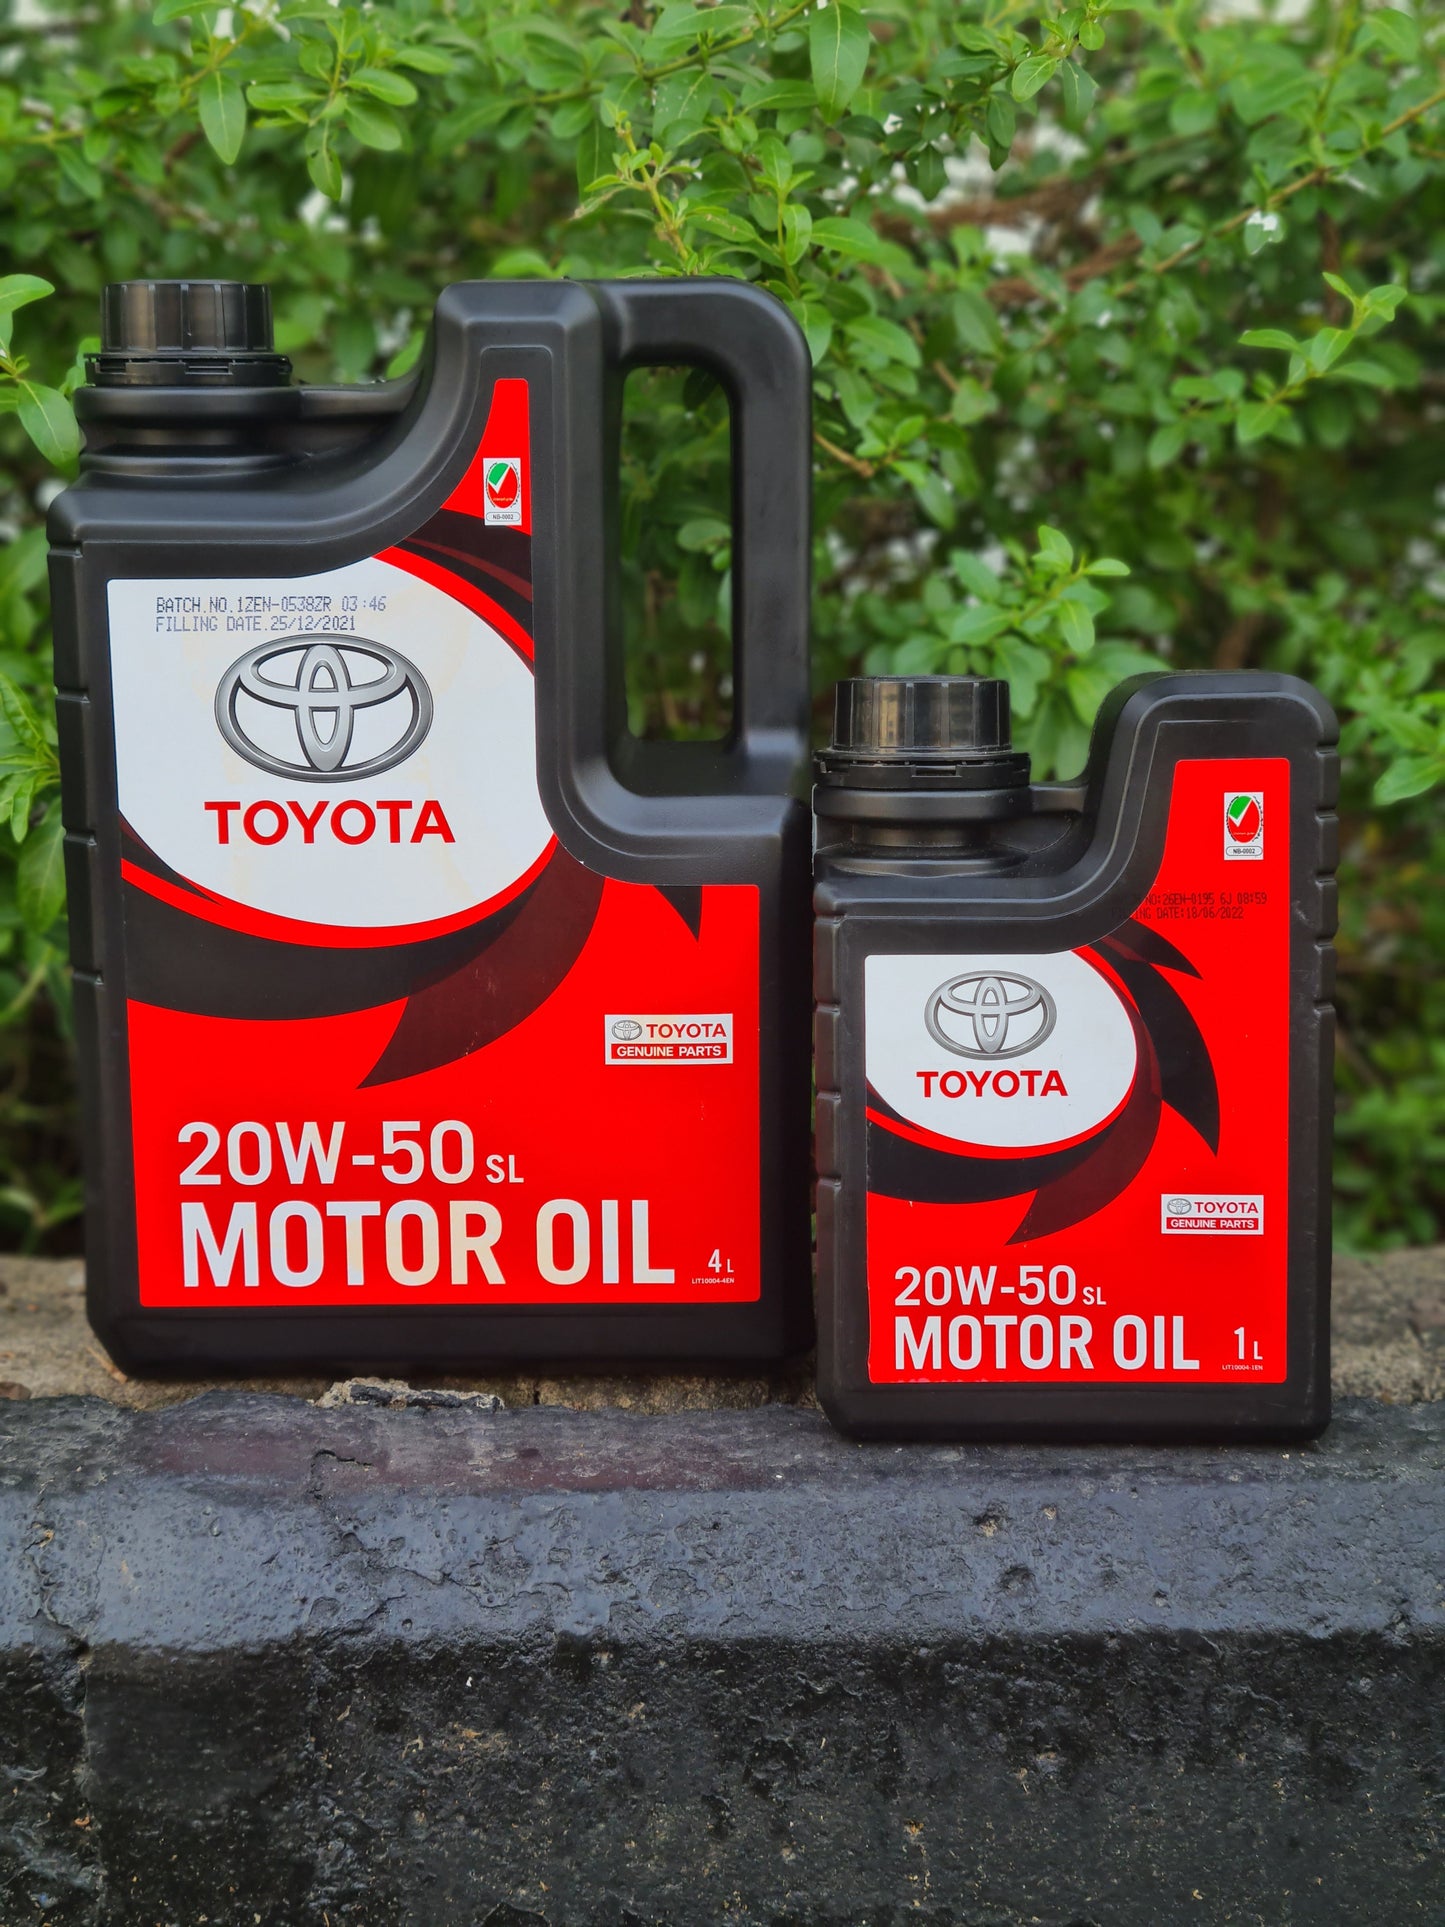 TOYOTA 20W-50 Motor Oil